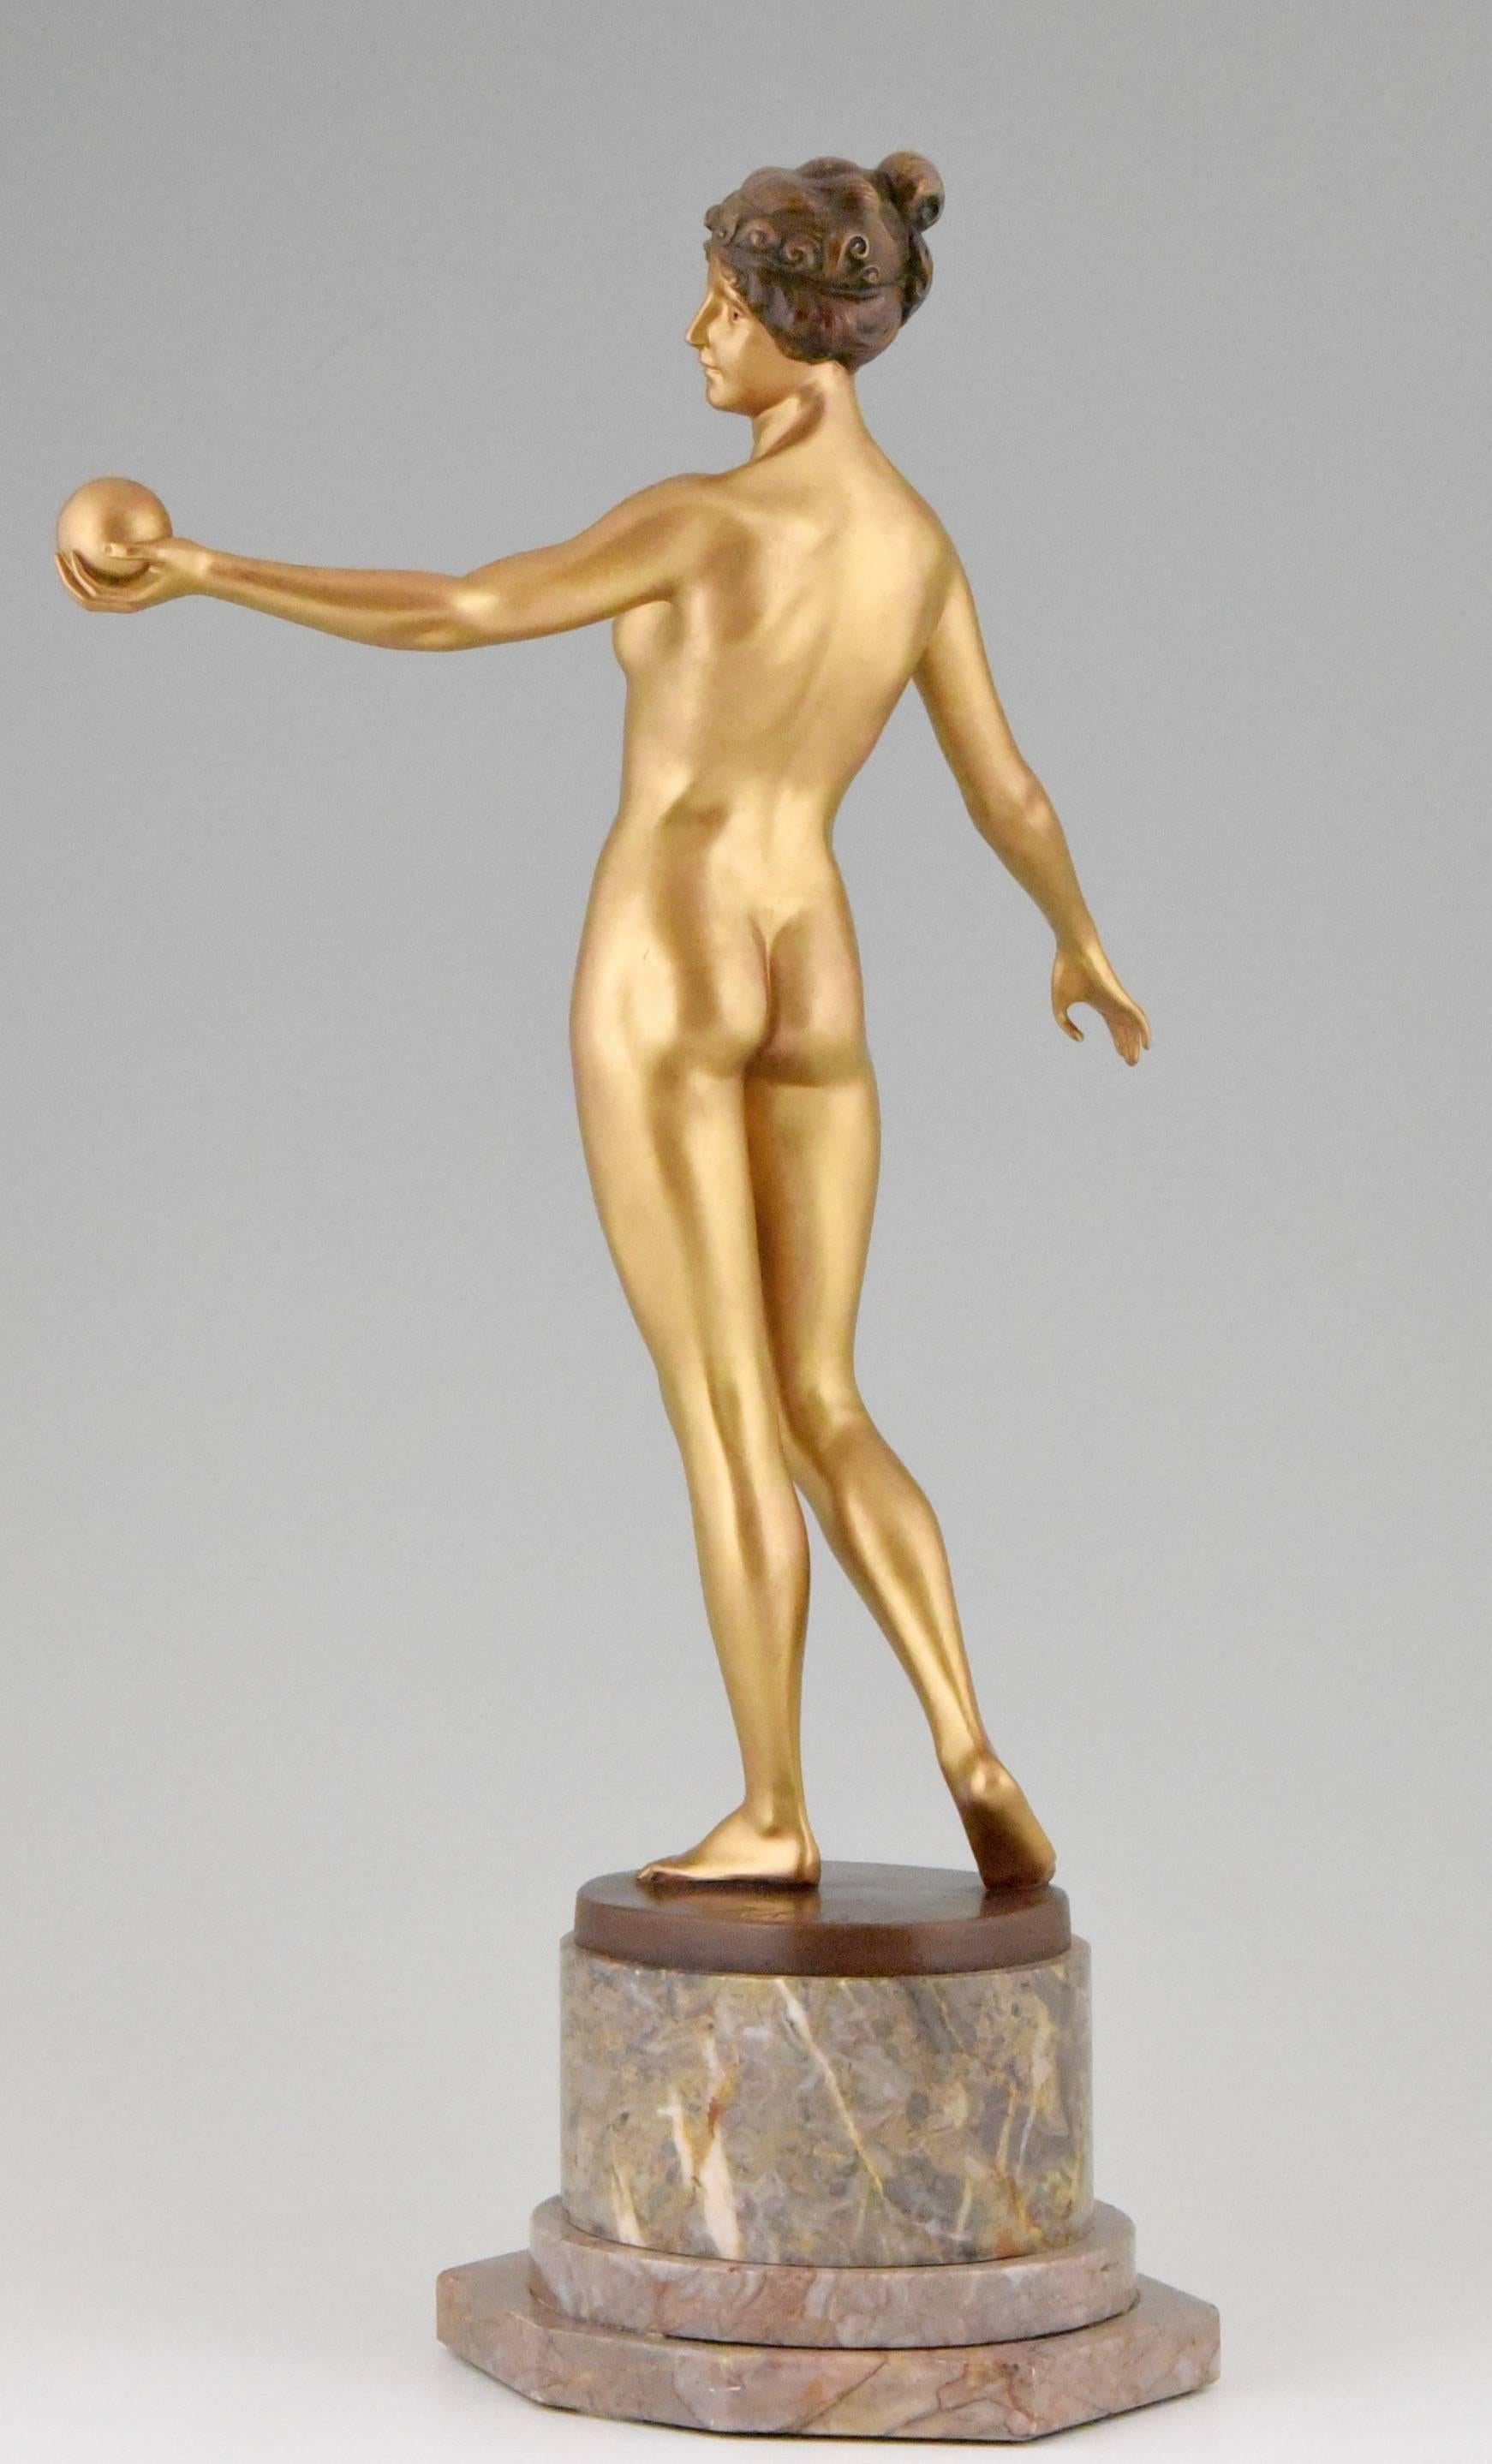 20th Century Art Nouveau bronze sculpture of a nude holding a ball by Hans Keck 1900